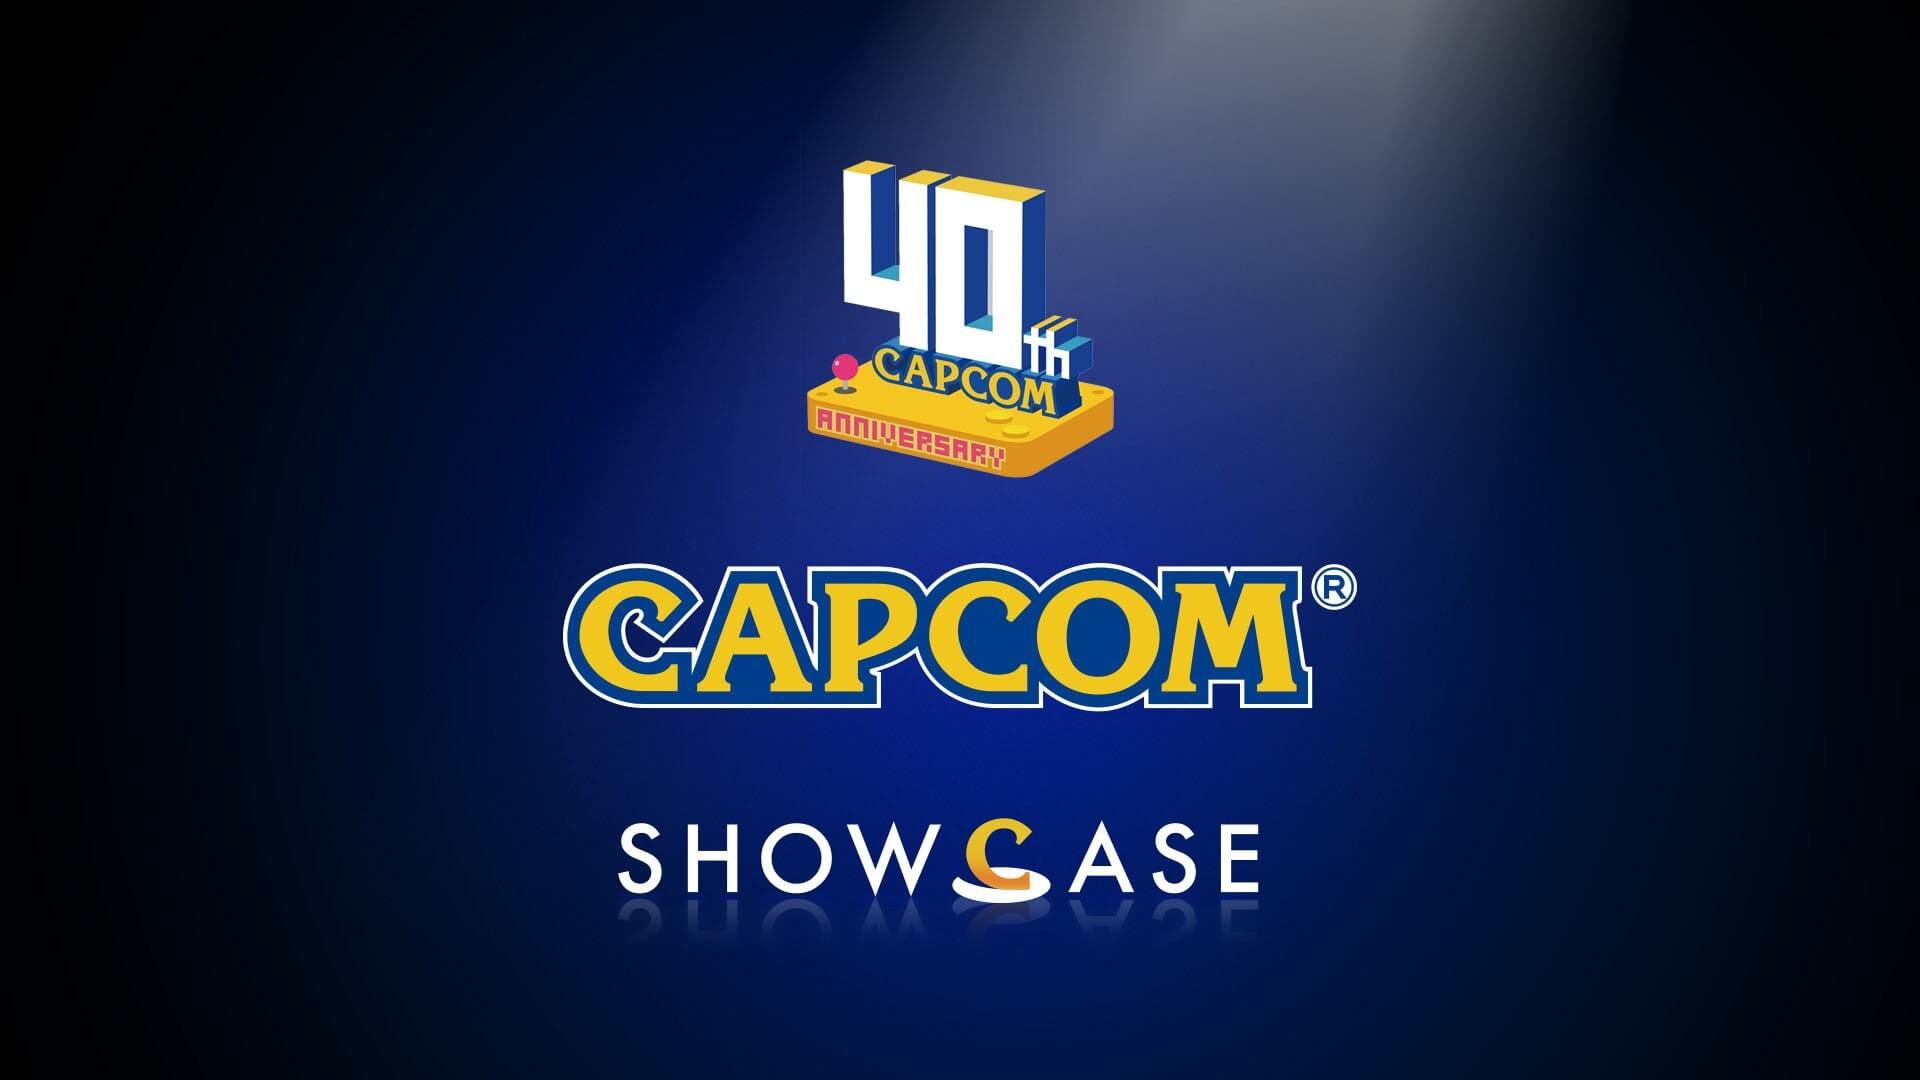 The next Capcom Showcase already has a date and time